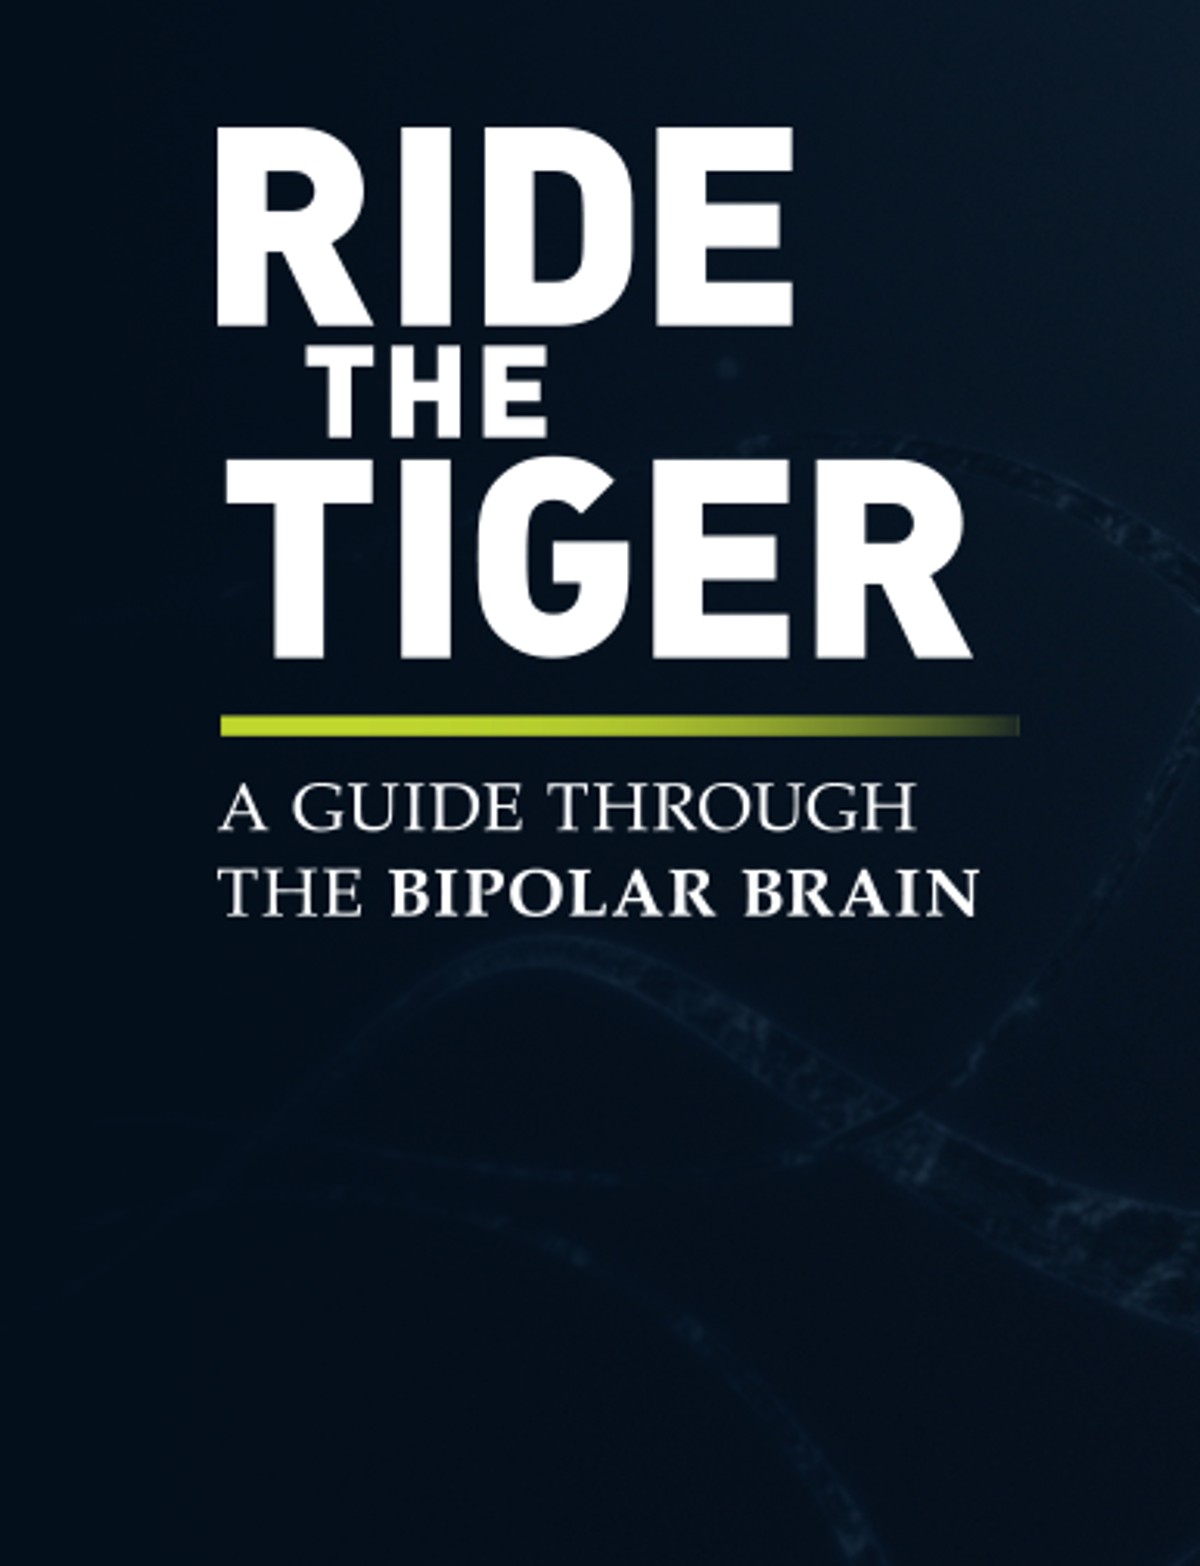 Nonton film Ride the Tiger A Guide Through the Bipolar Brain layarkaca21 indoxx1 ganool online streaming terbaru